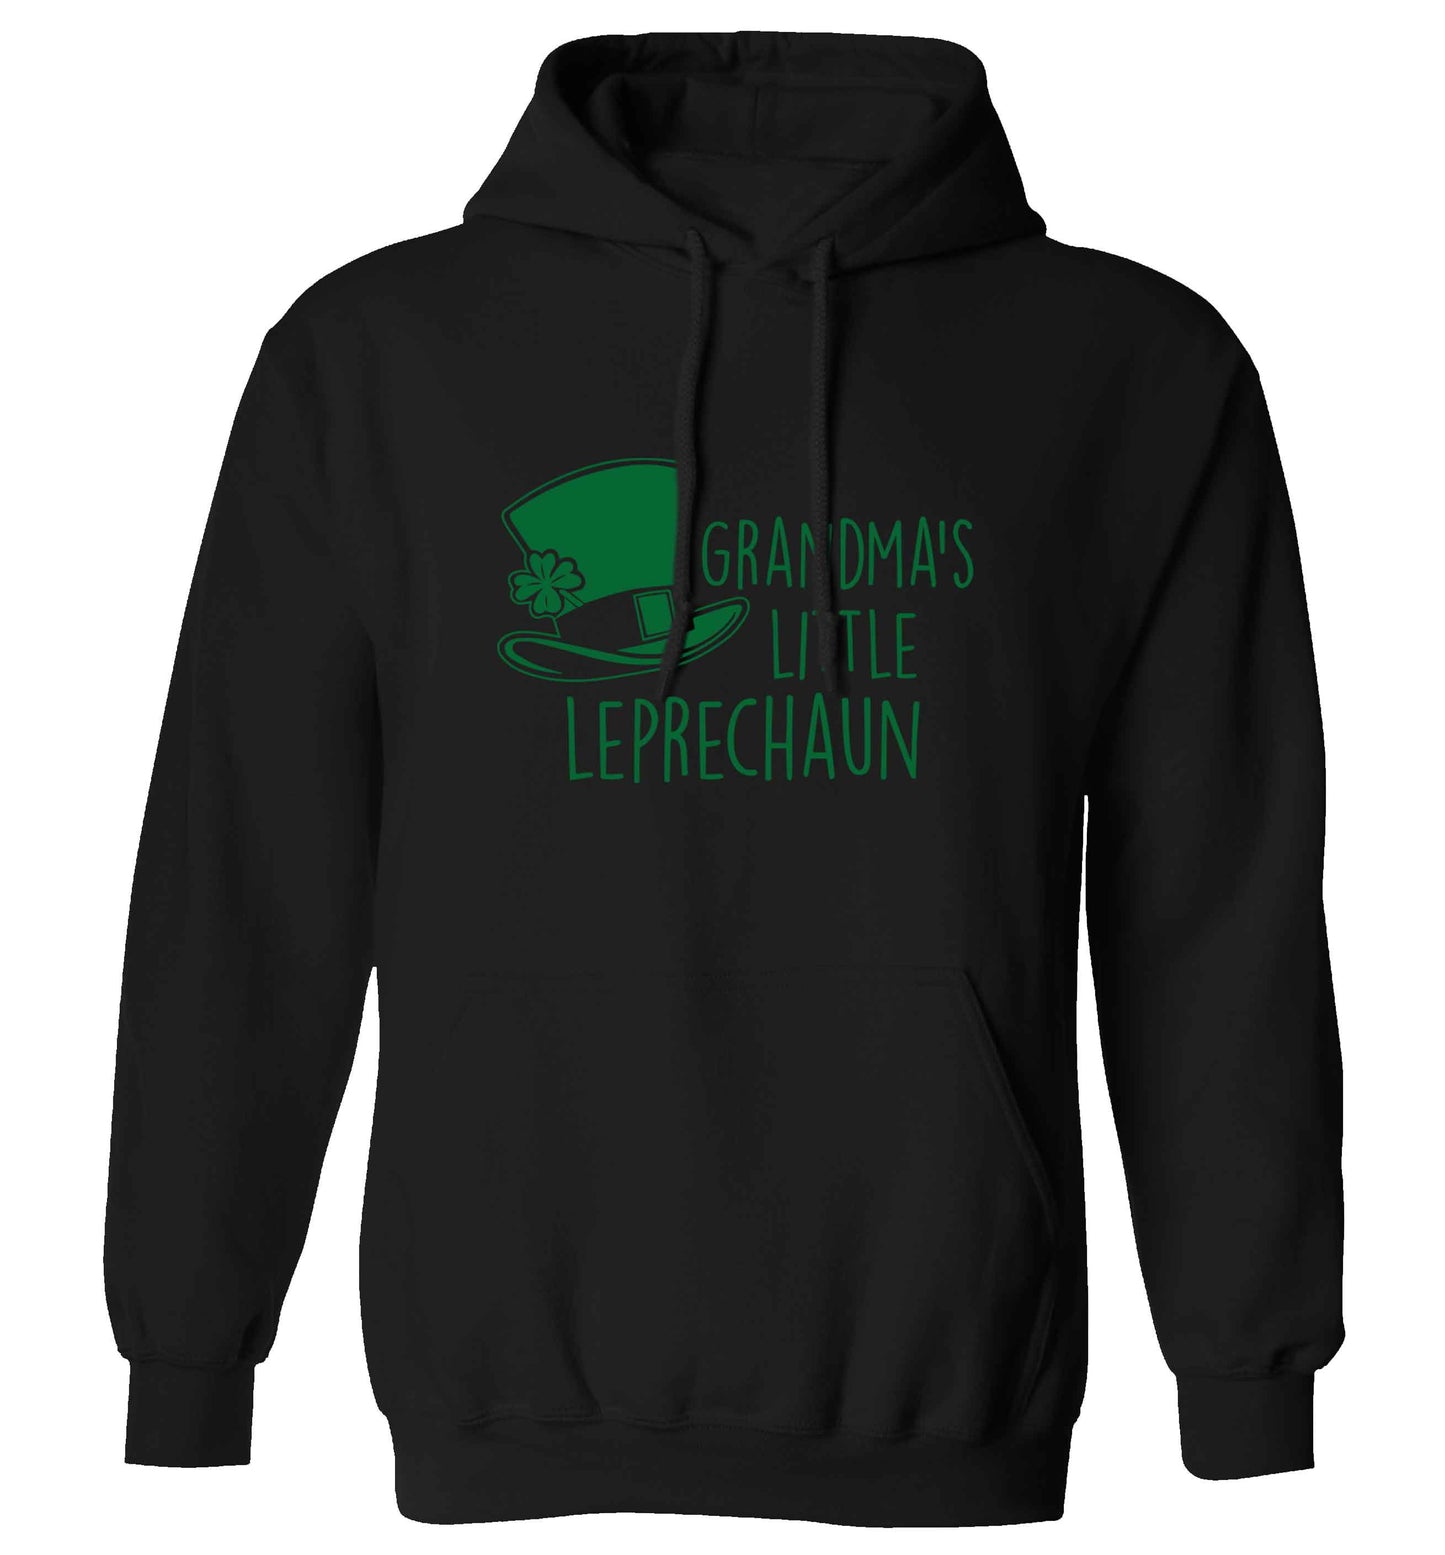 Grandma's little leprechaun adults unisex black hoodie 2XL